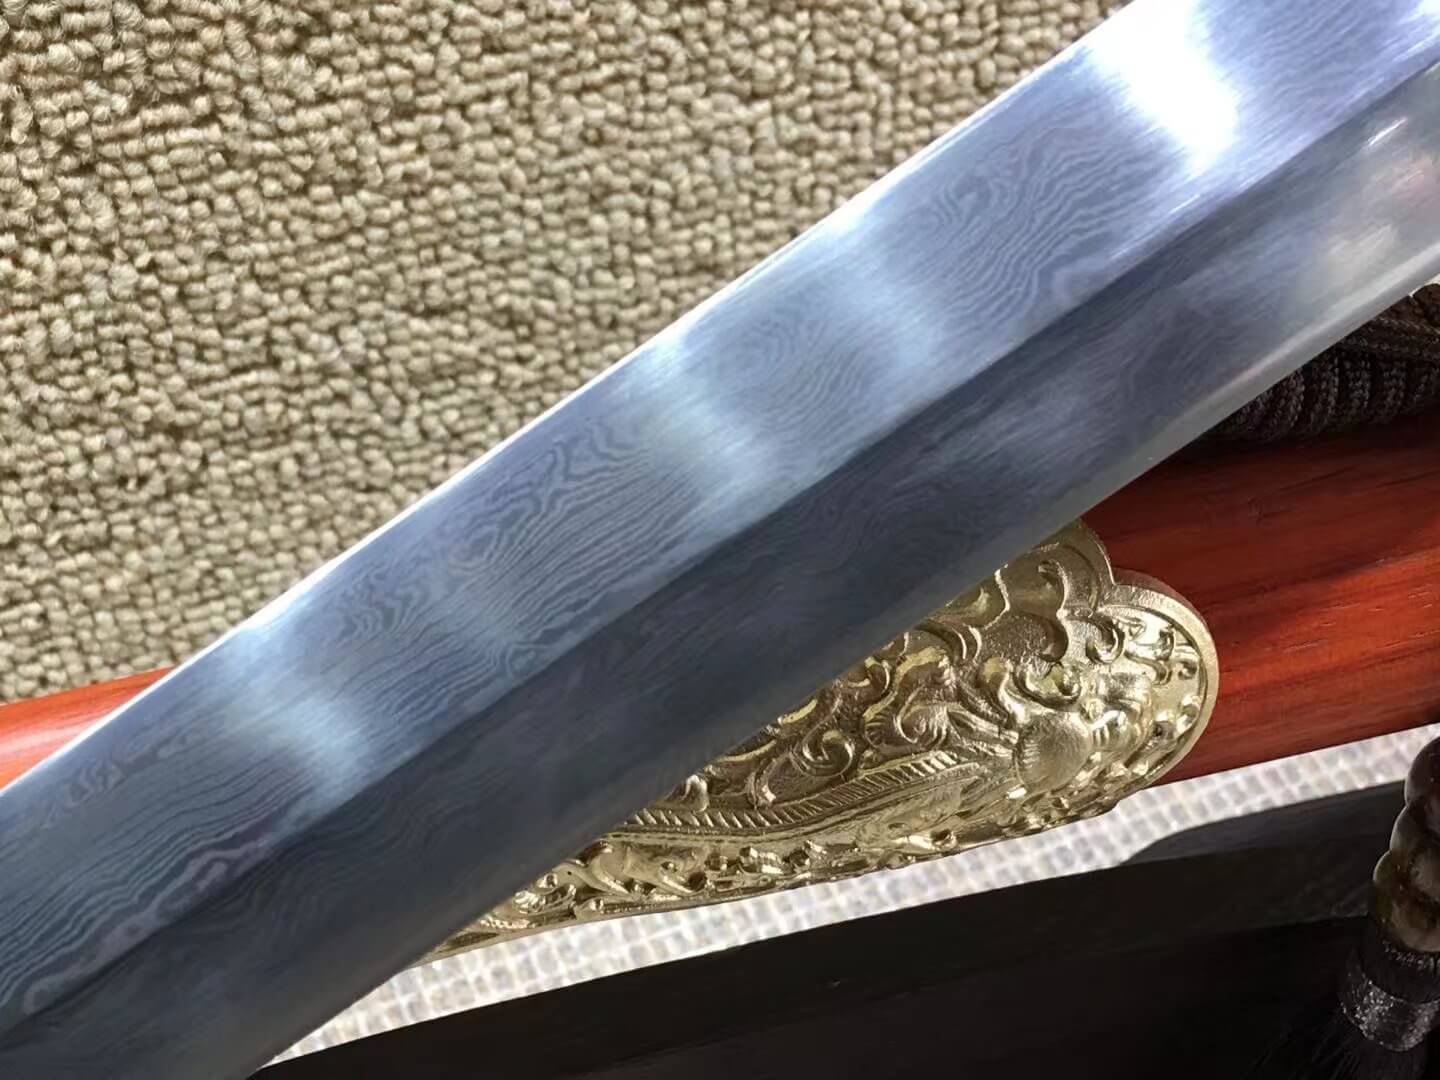 Qianlong sword,Pattern steel blade,Red scabbard,Brass fittings - Chinese sword shop